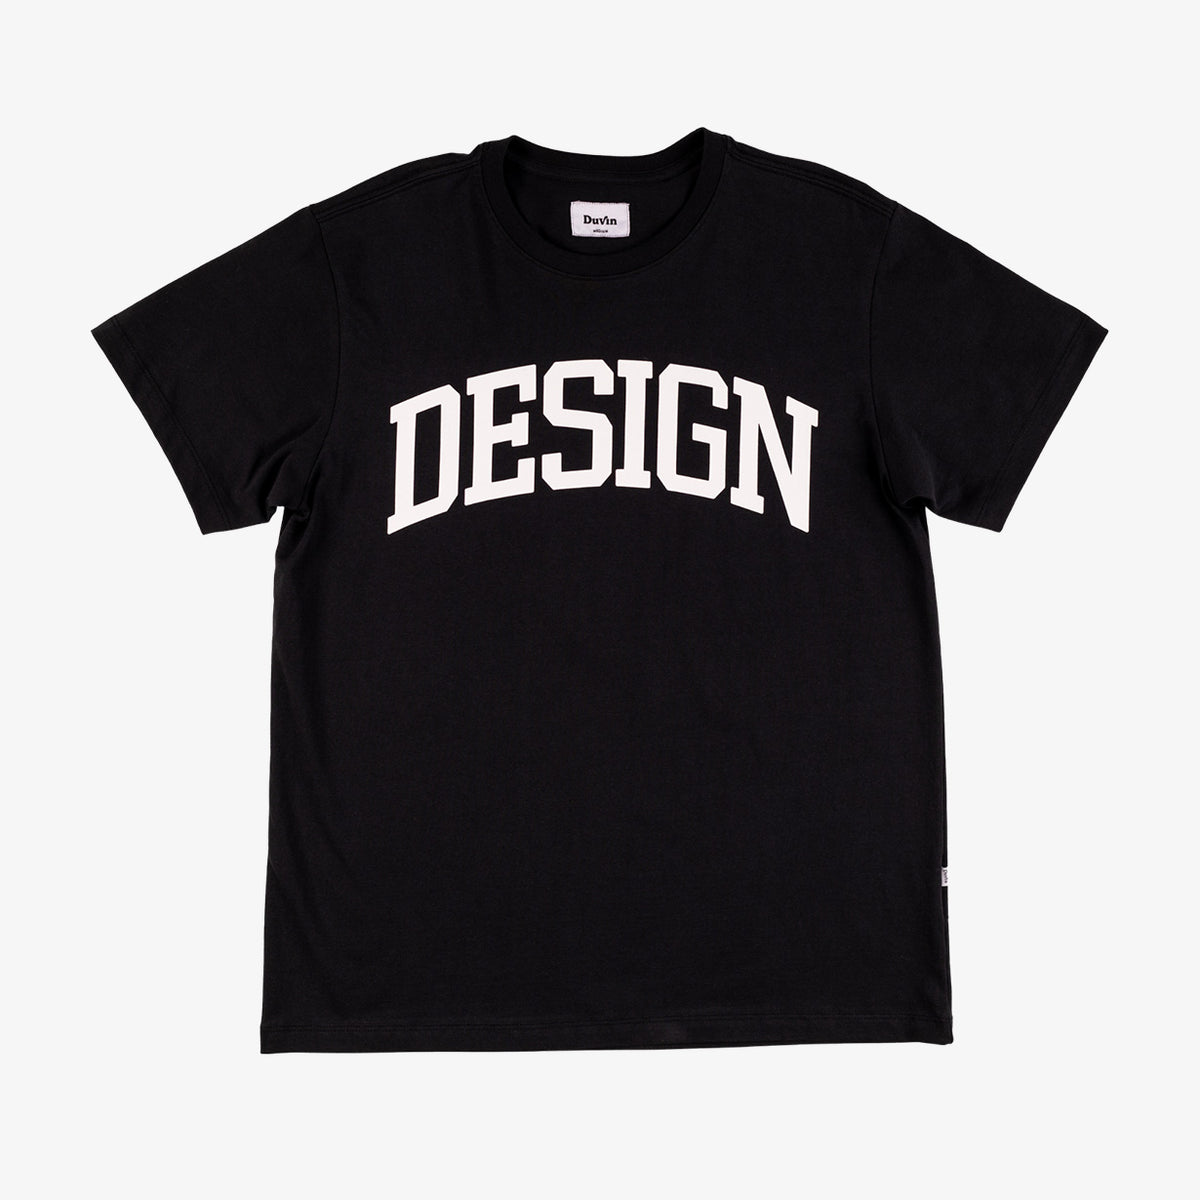 Design Tee - Black